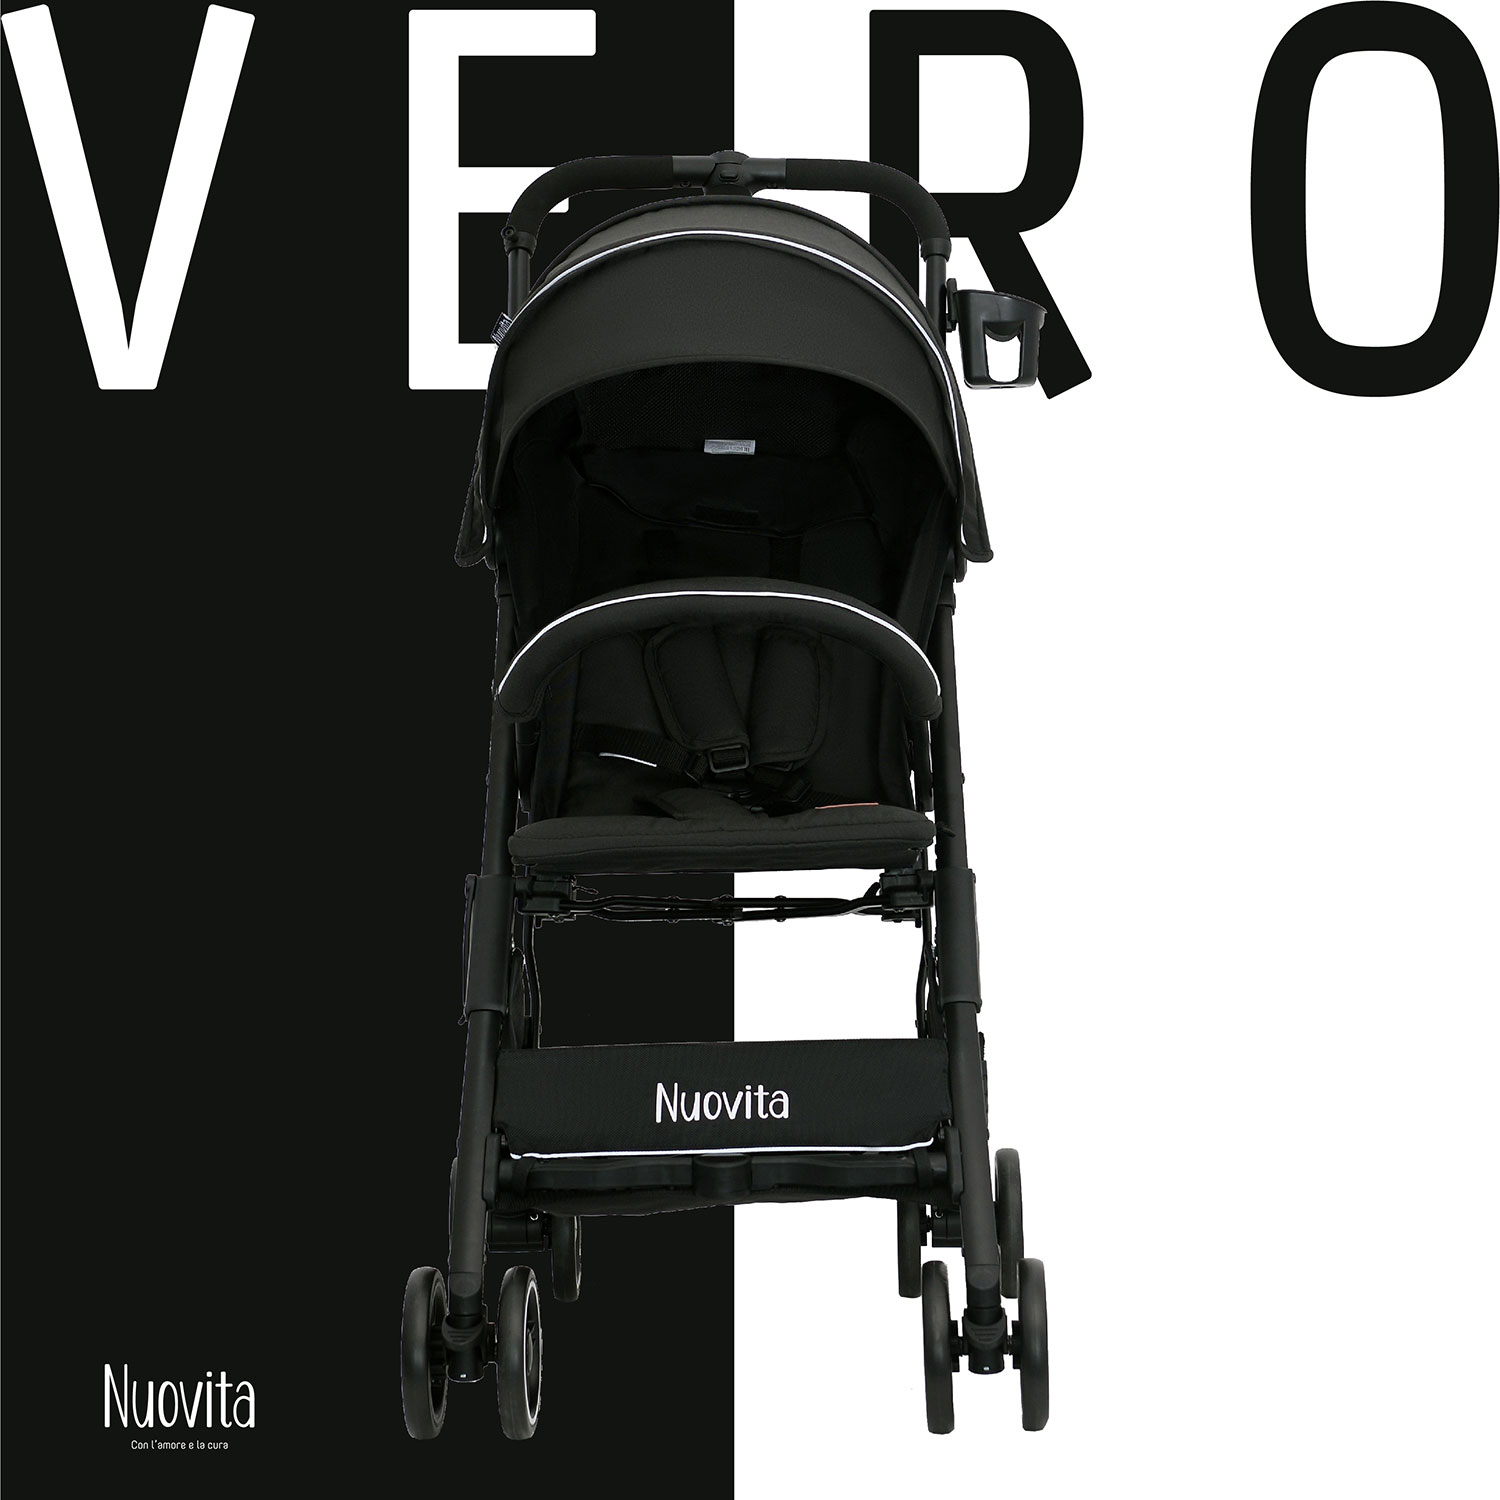 Прогулочная коляска Nuovita Vero Nero Черный прогулочная коляска nuovita vero blu голубой